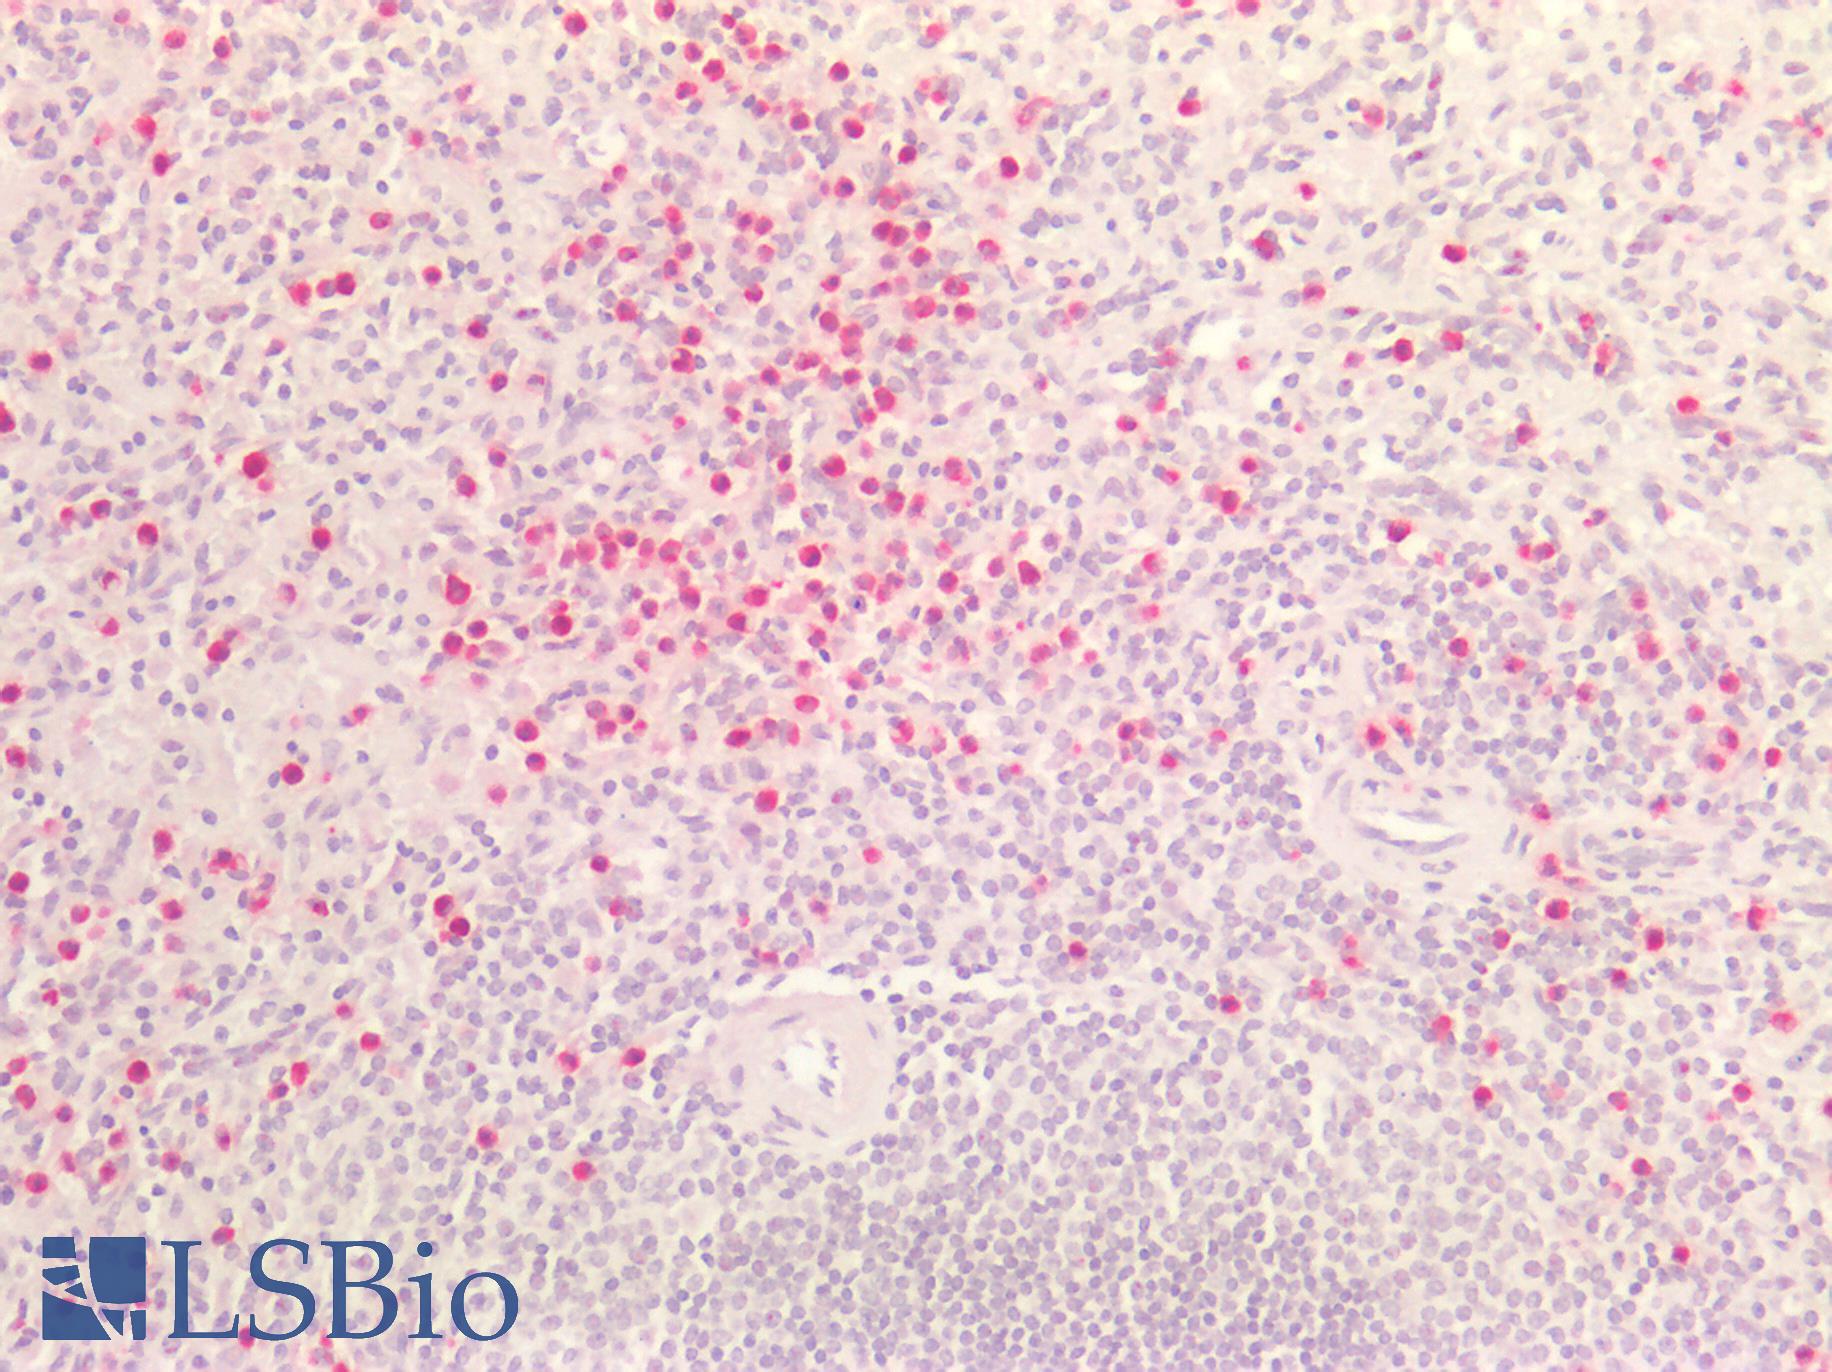 HNE / Neutrophil Elastase Antibody - Human Spleen: Formalin-Fixed, Paraffin-Embedded (FFPE)